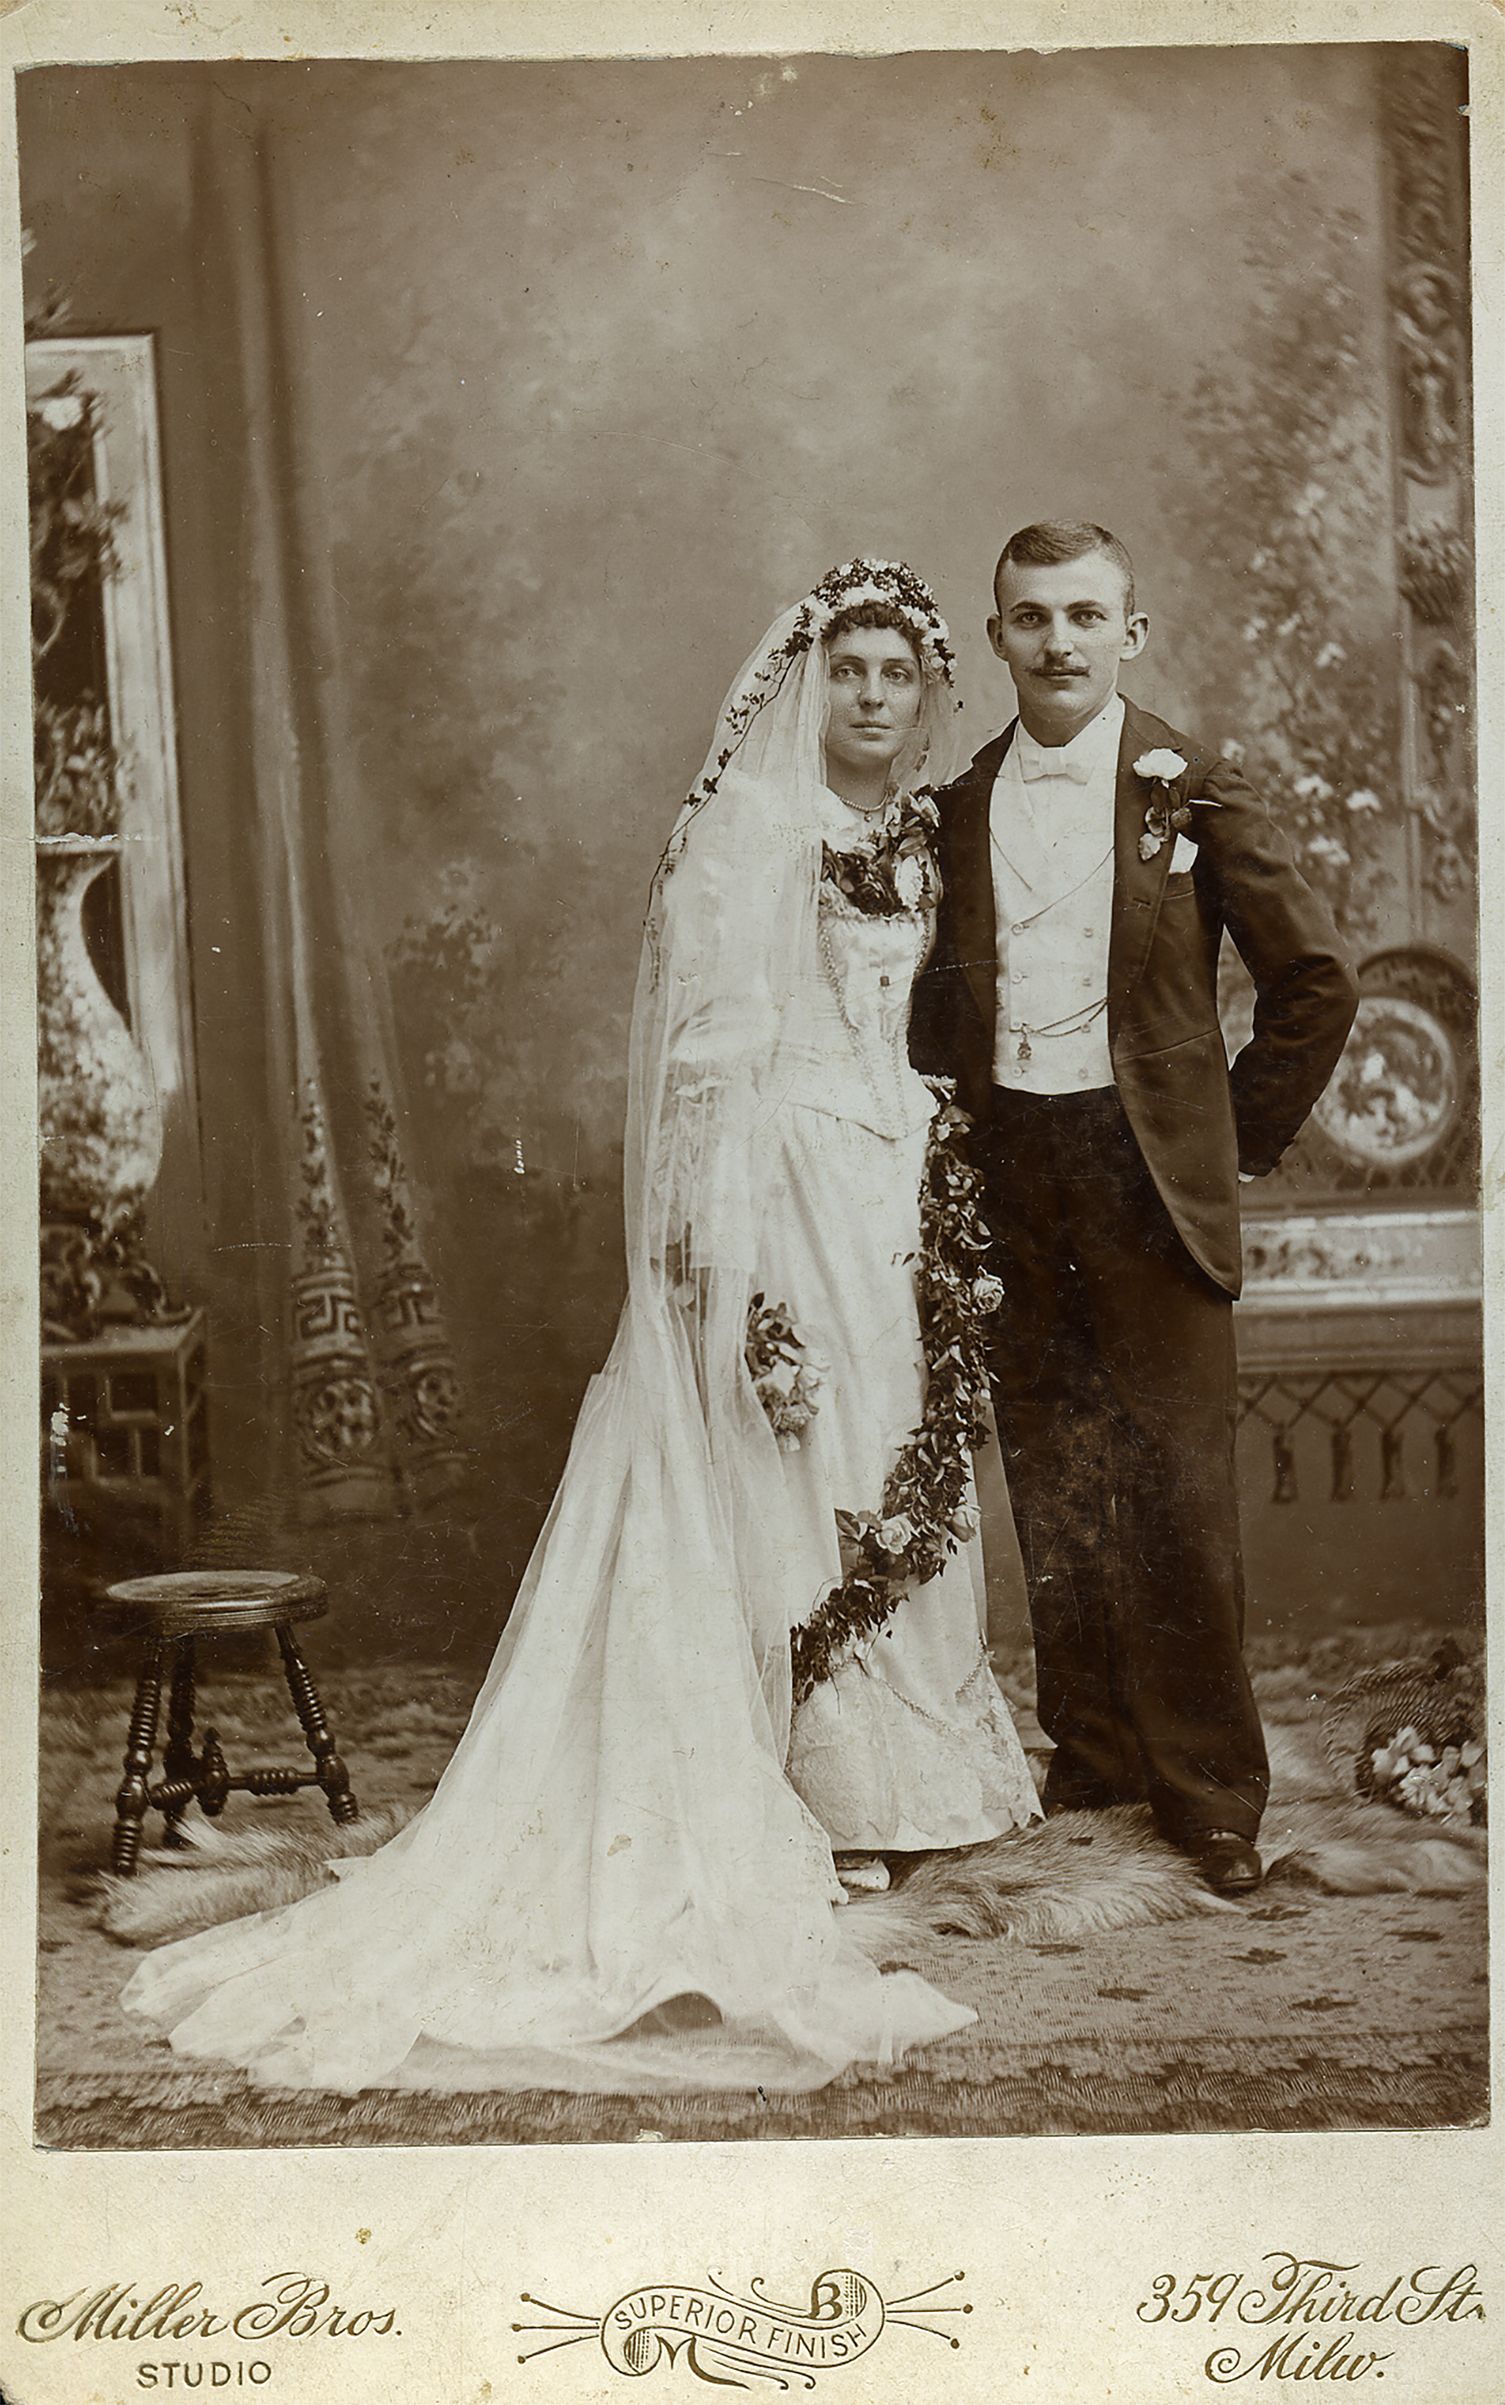 Capturing Love Through Time: Exploring 19th Century Wedding Photos